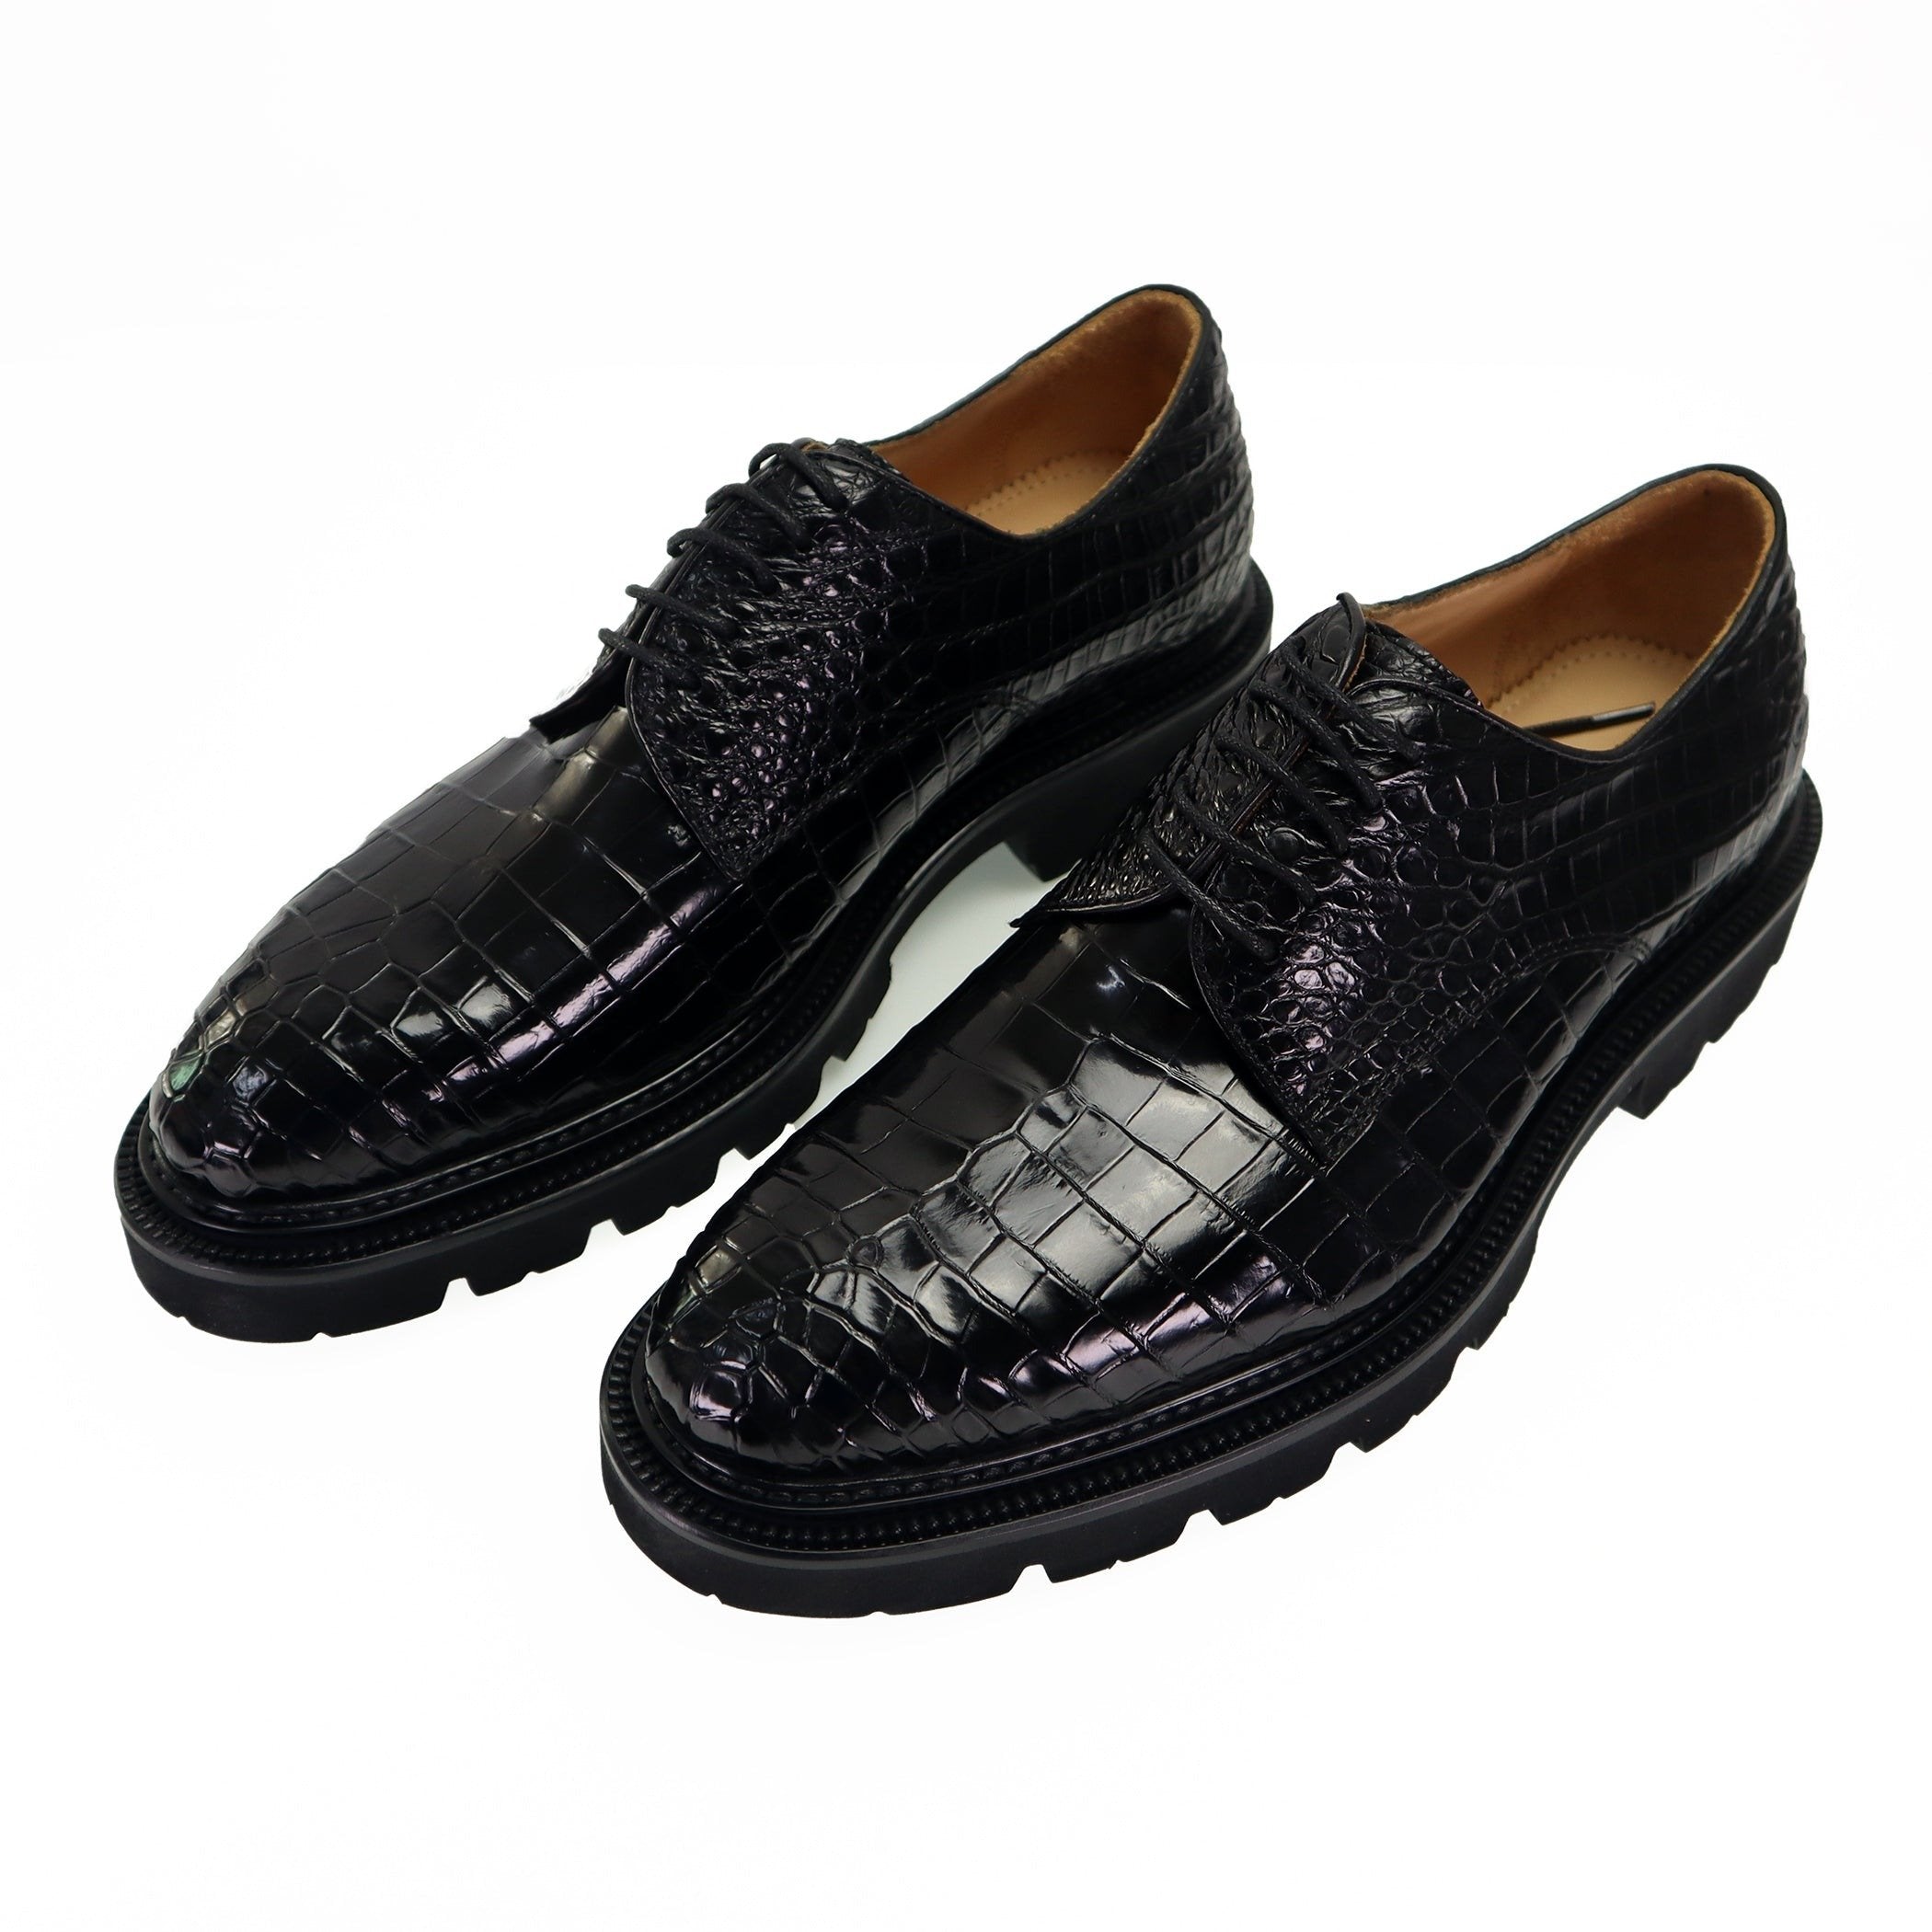 Genuine Alligator Leather Dress Shoes Lace Up Cap-Toe Brogue Shoes